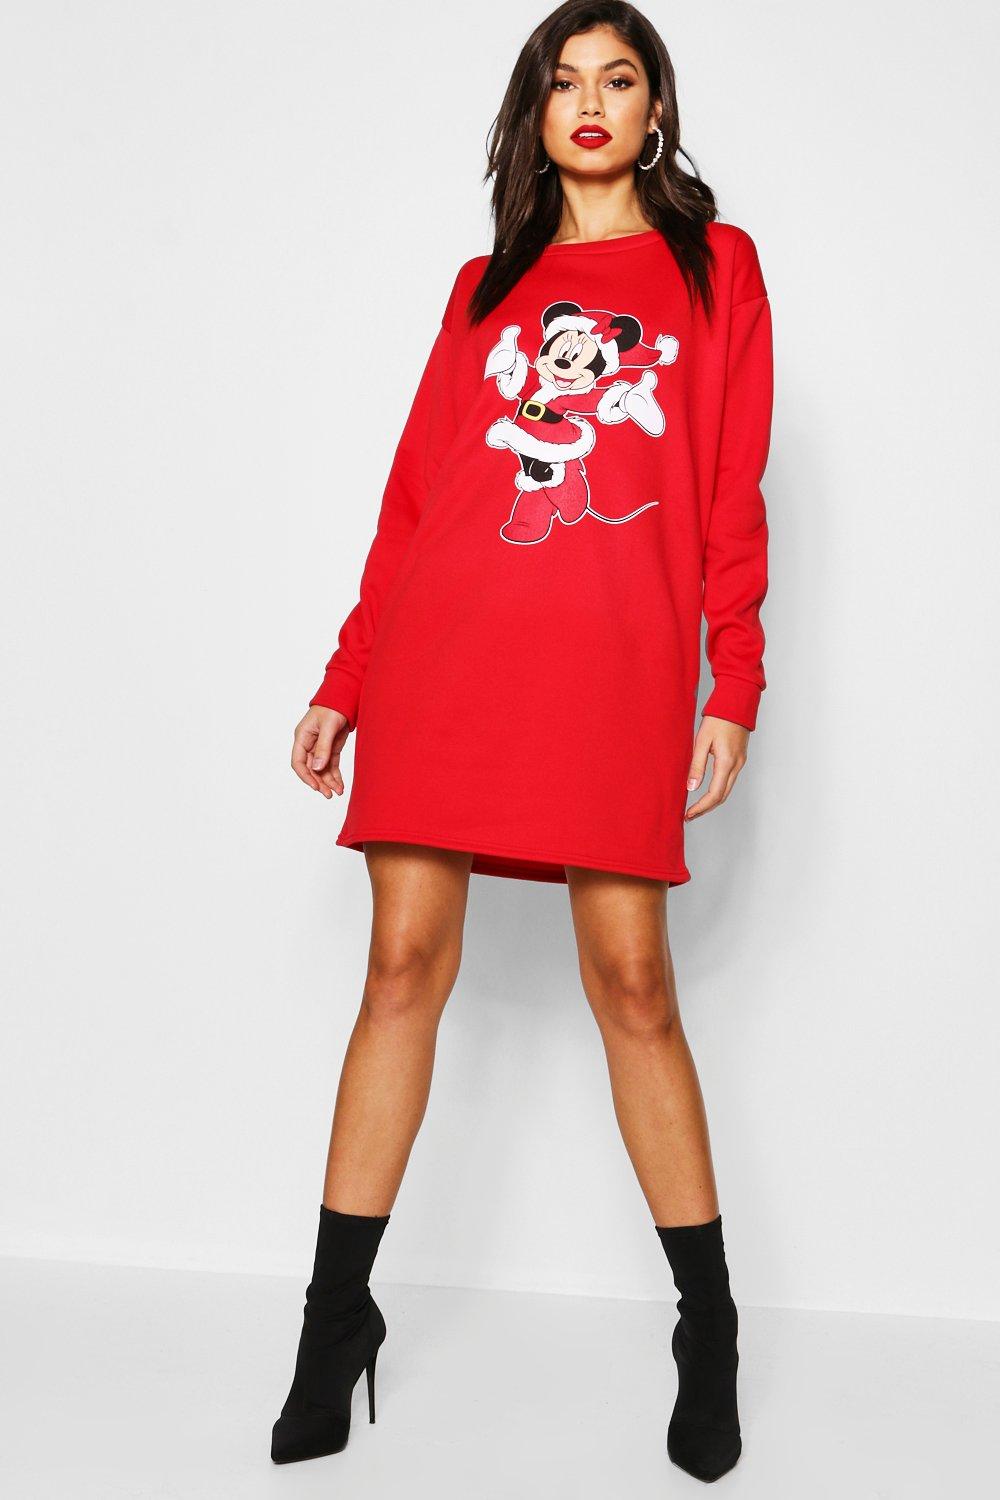 Disney Christmas Minnie Sweatshirt 